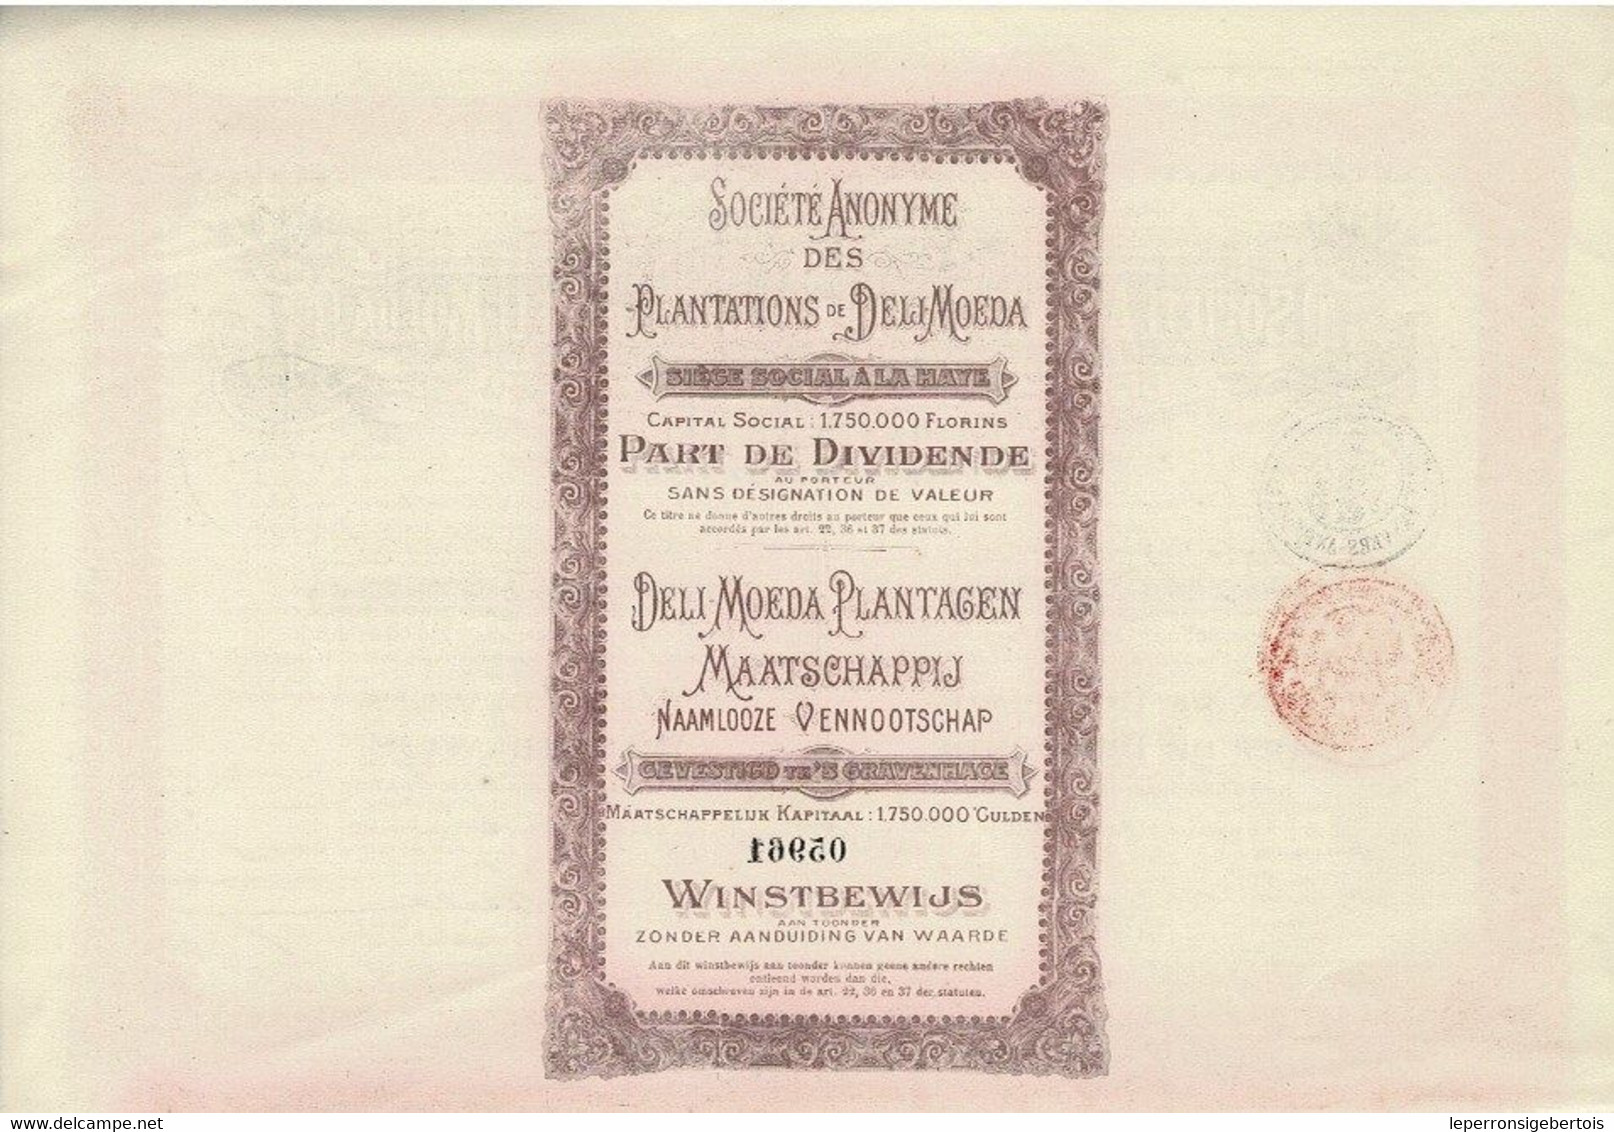 Titre De 1910 - Société Anonyme Des Plantations De Deli-Moeda - Deli-Moeda Plantagen Maatschappij - - Asia